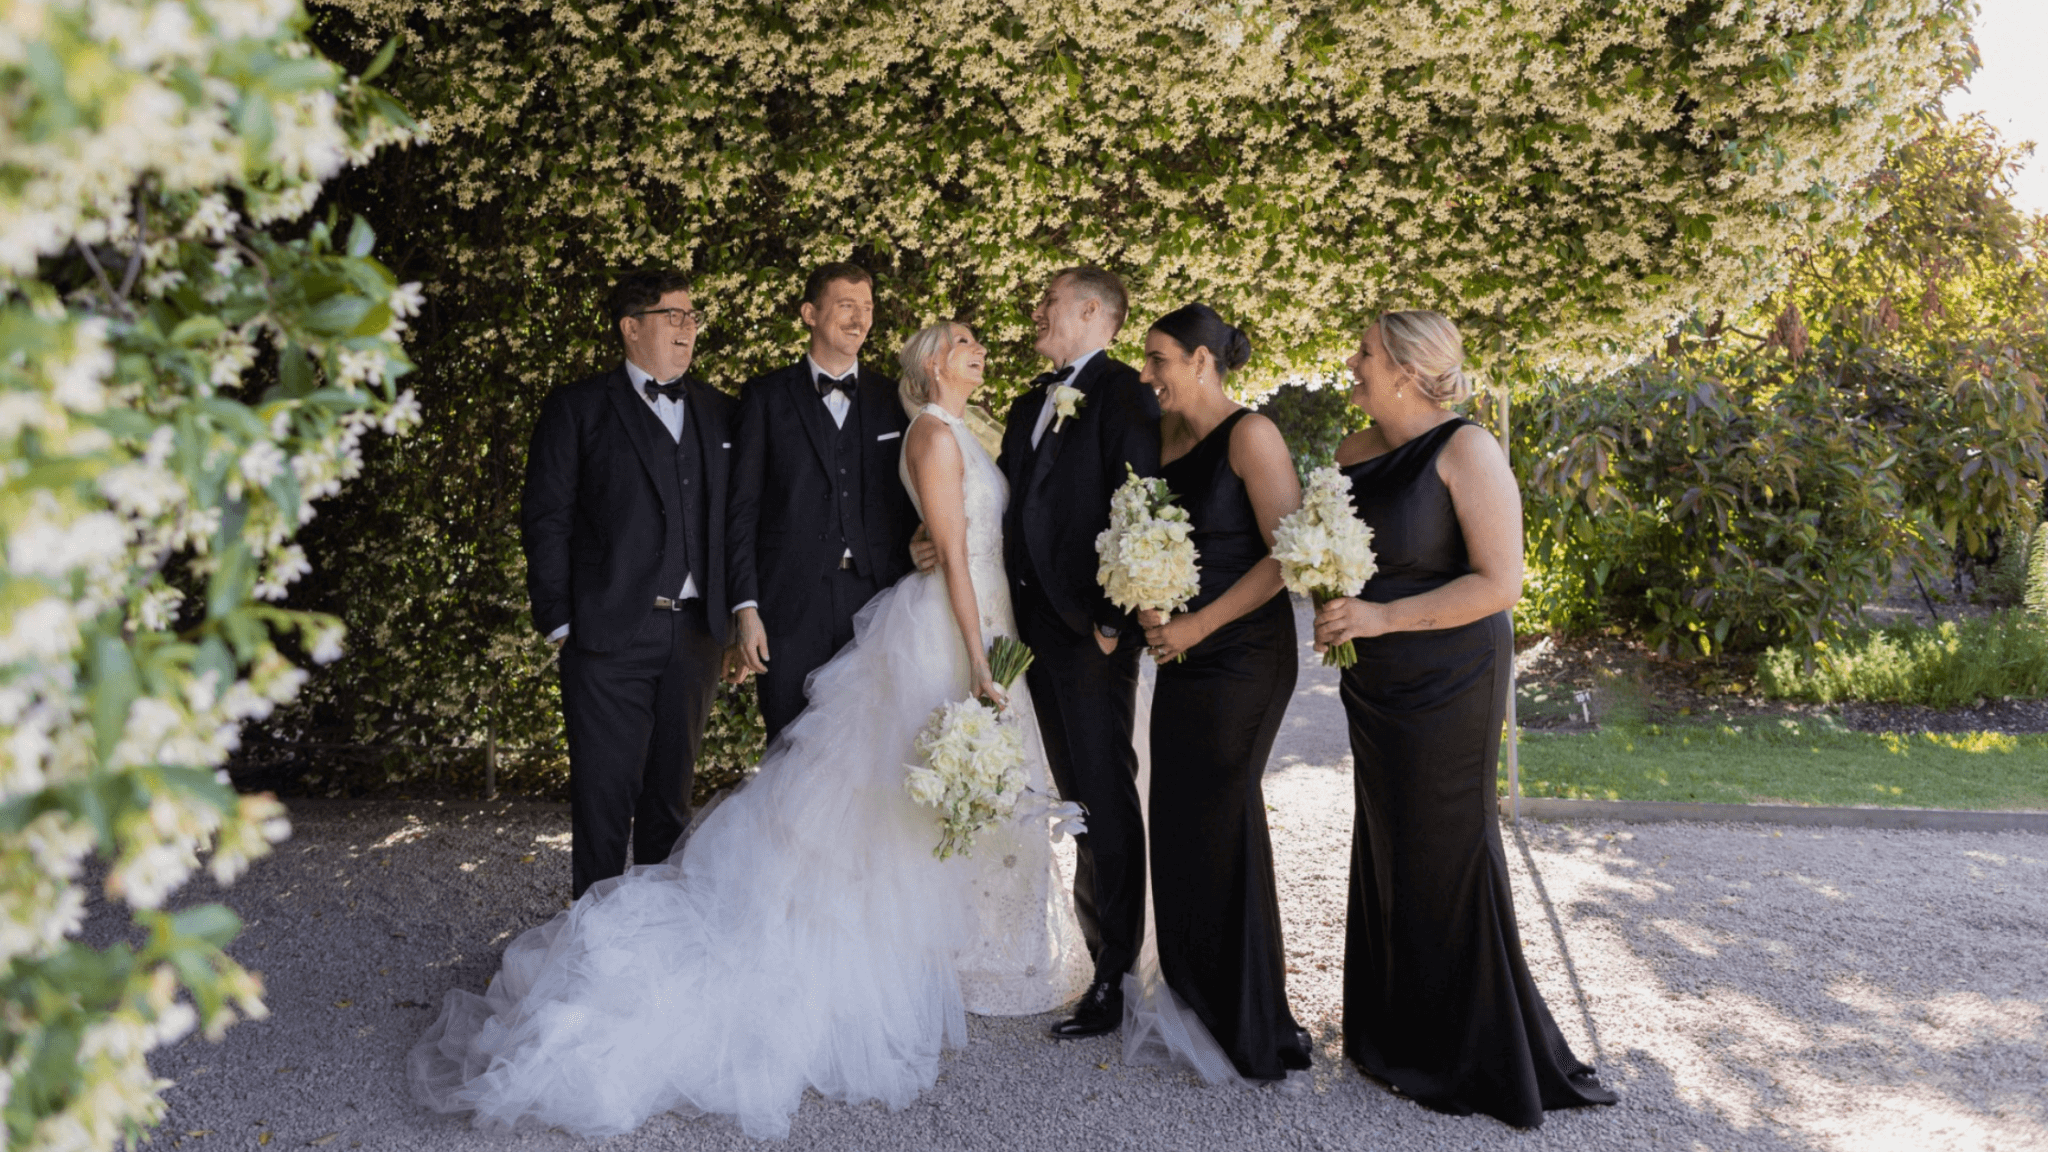 Wedding moment captured by Luke John photography